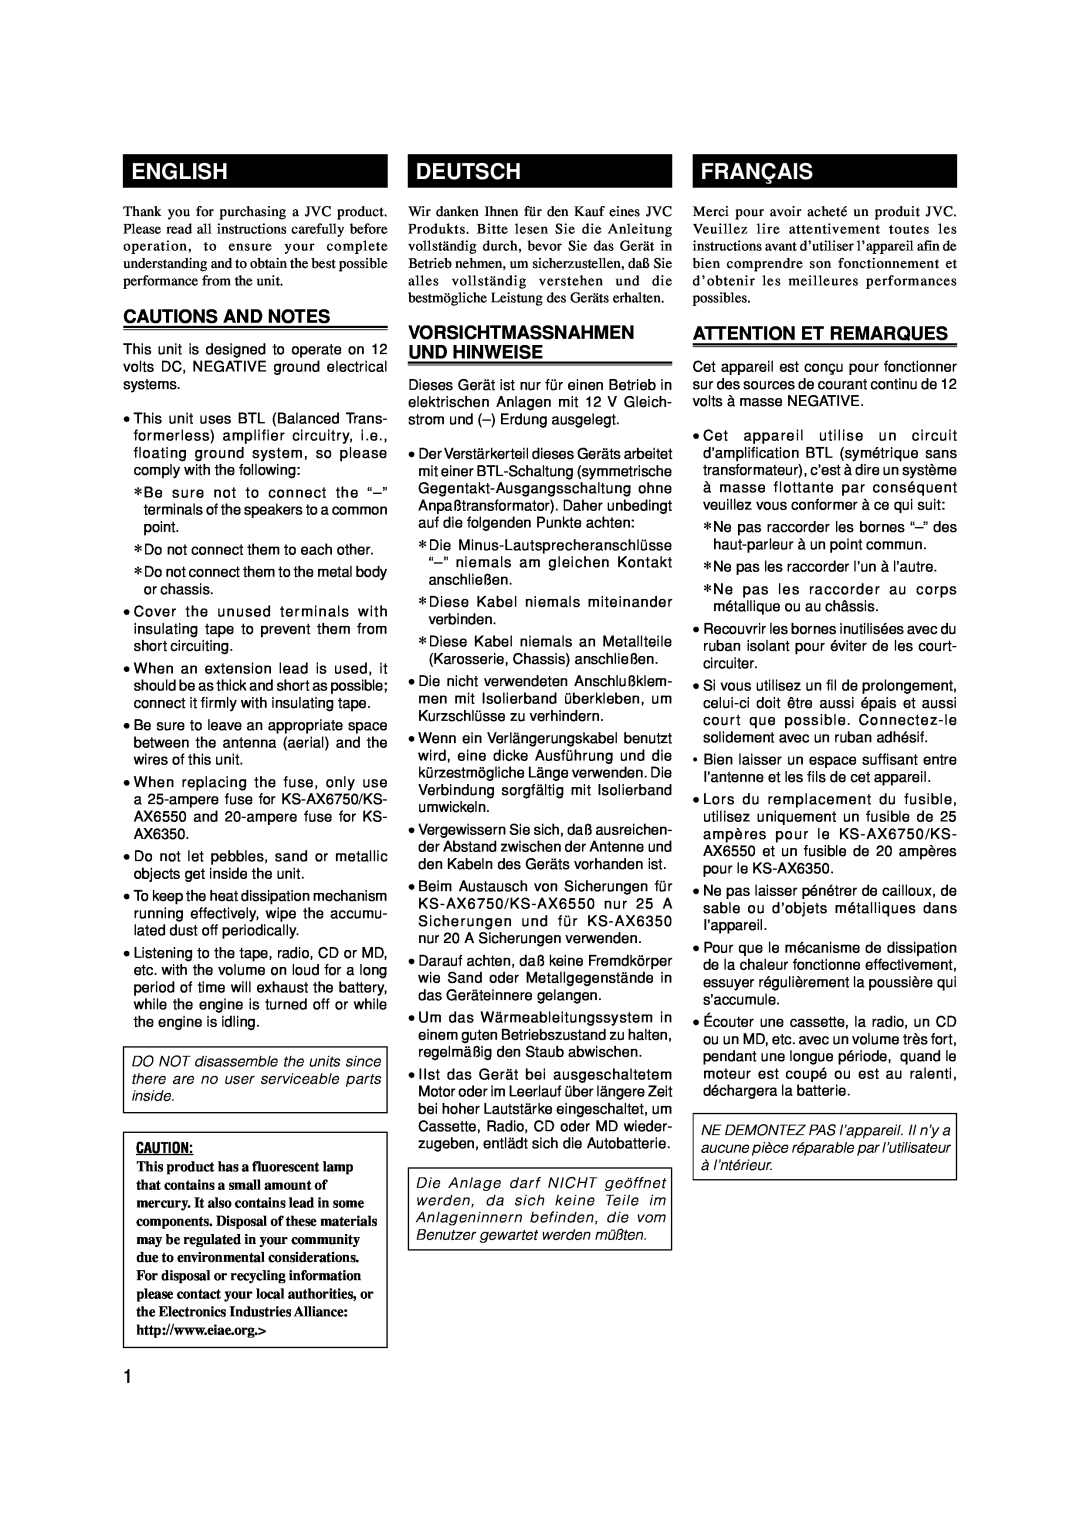 JVC KS-AX6350 English, Deutsch, Français, Cautions And Notes, Vorsichtmassnahmen Und Hinweise, Attention Et Remarques 